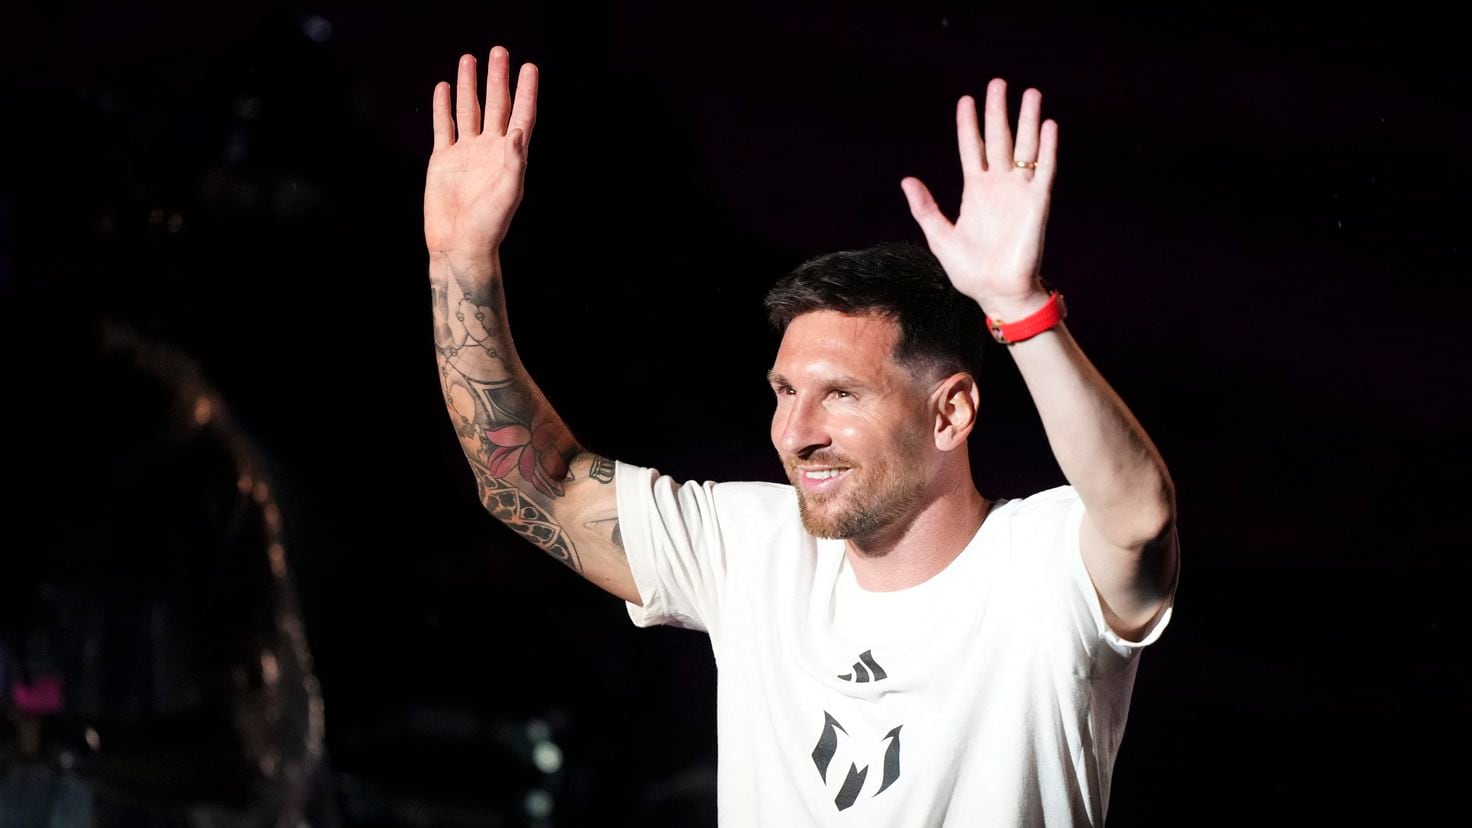 Messi’s presentation with Inter Miami had 3.5 billion viewers